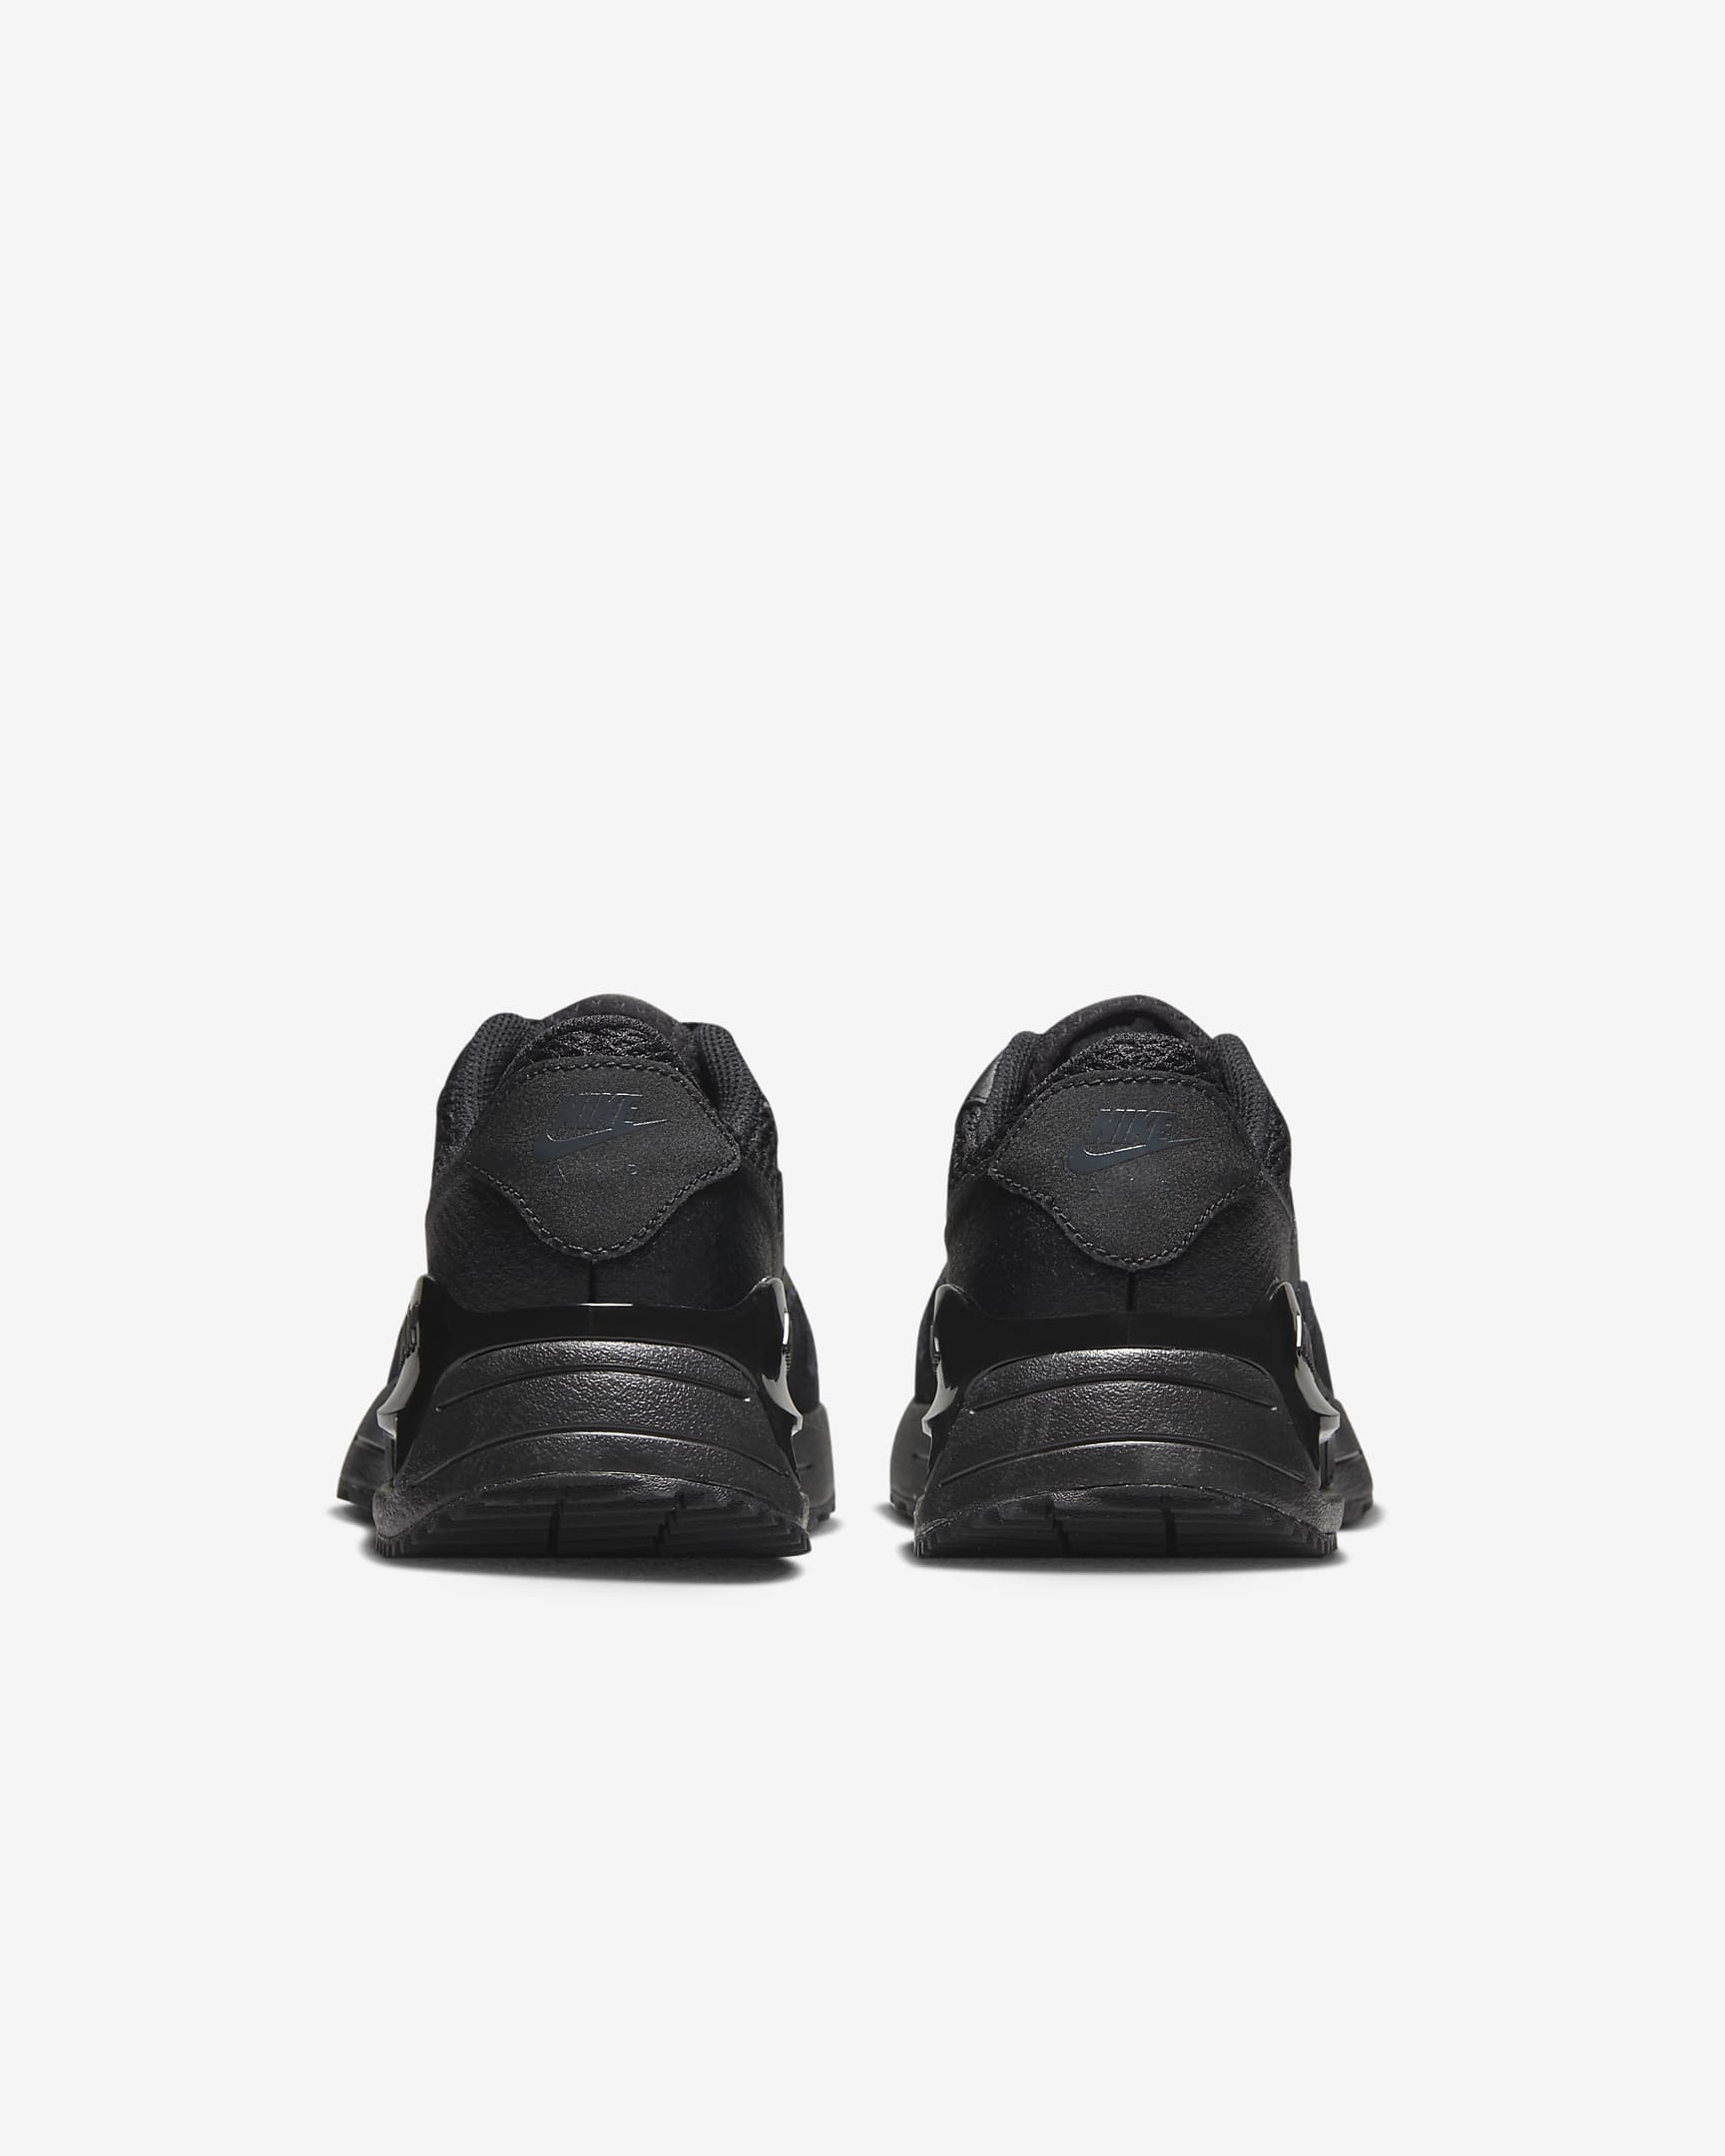 Nike Air Max SYSTM Older Kids' Shoes - Black/Black/Anthracite